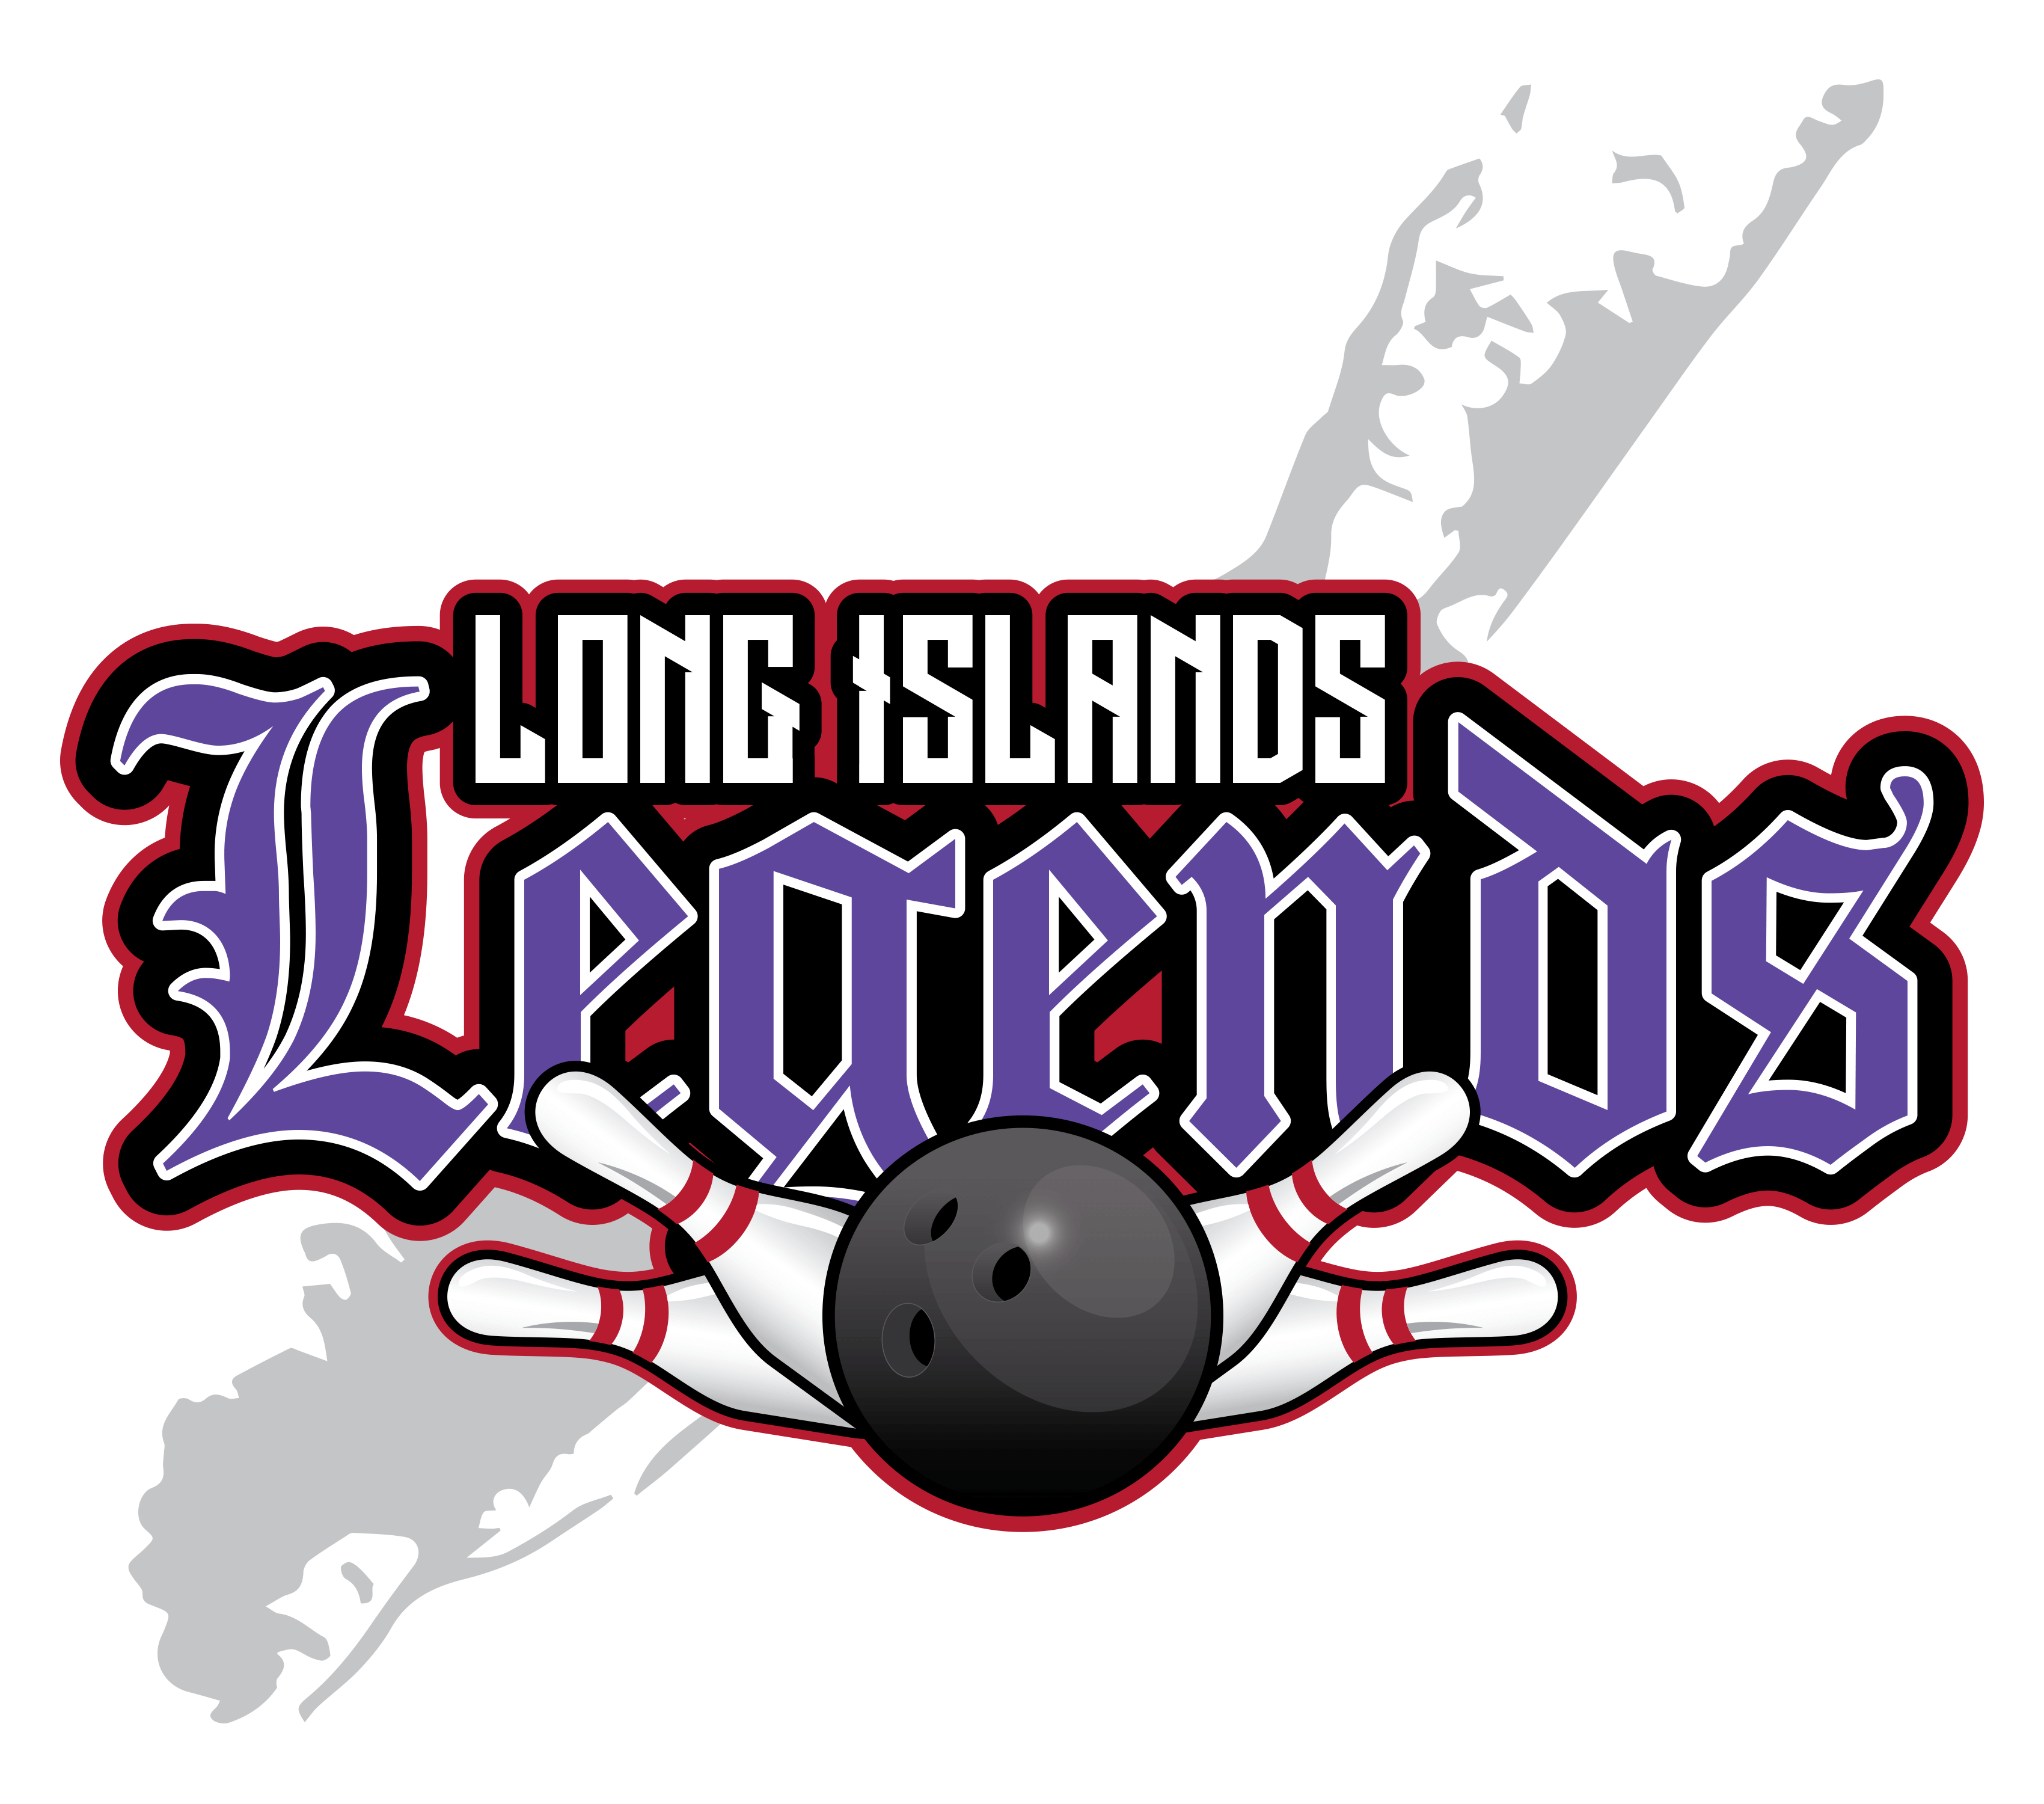 Long Island Legends